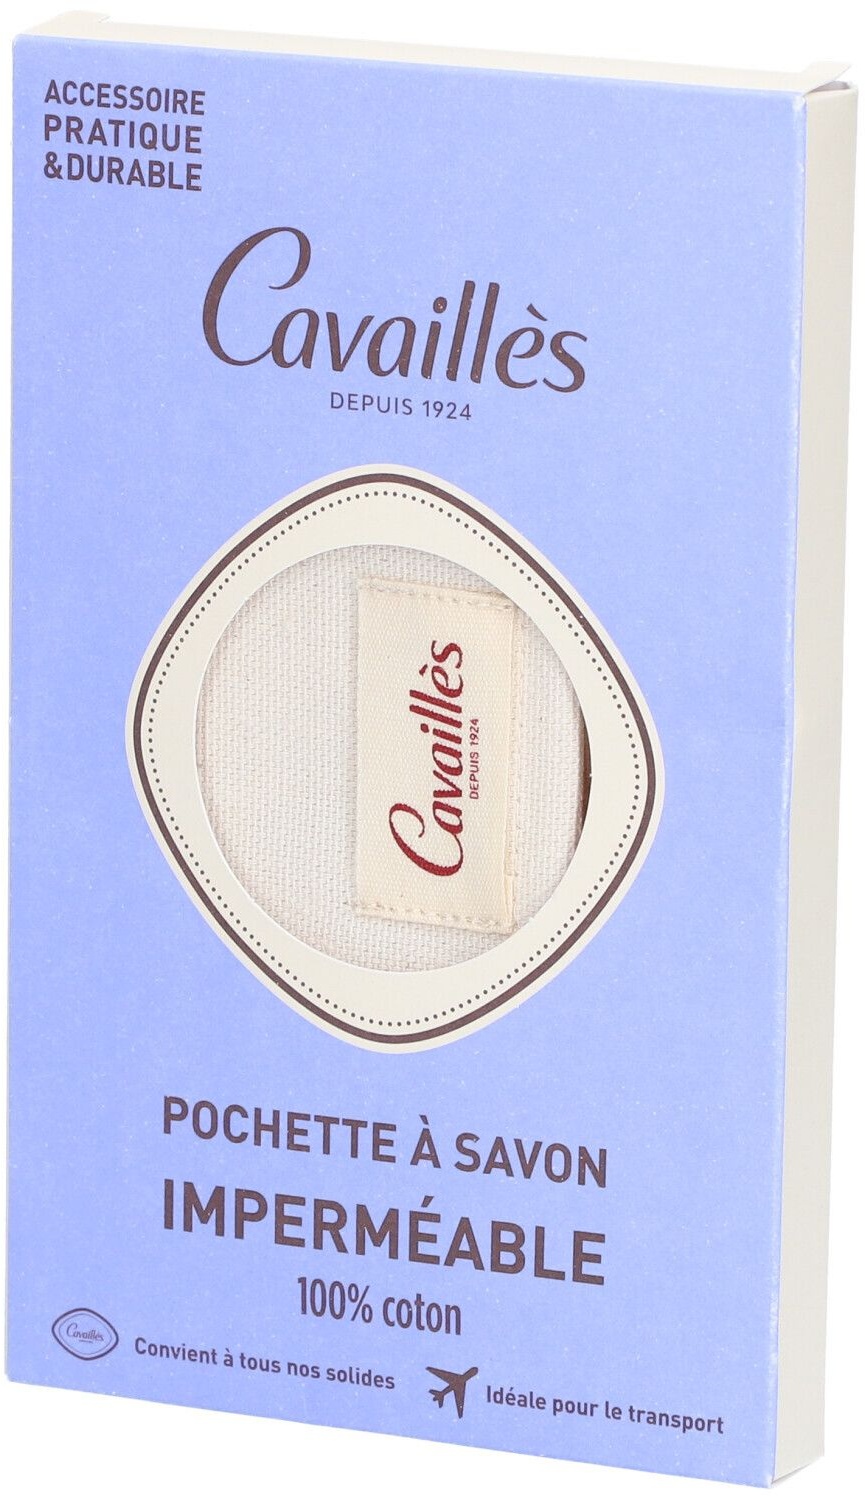 Cavaillès Wasserdichte Safontasche